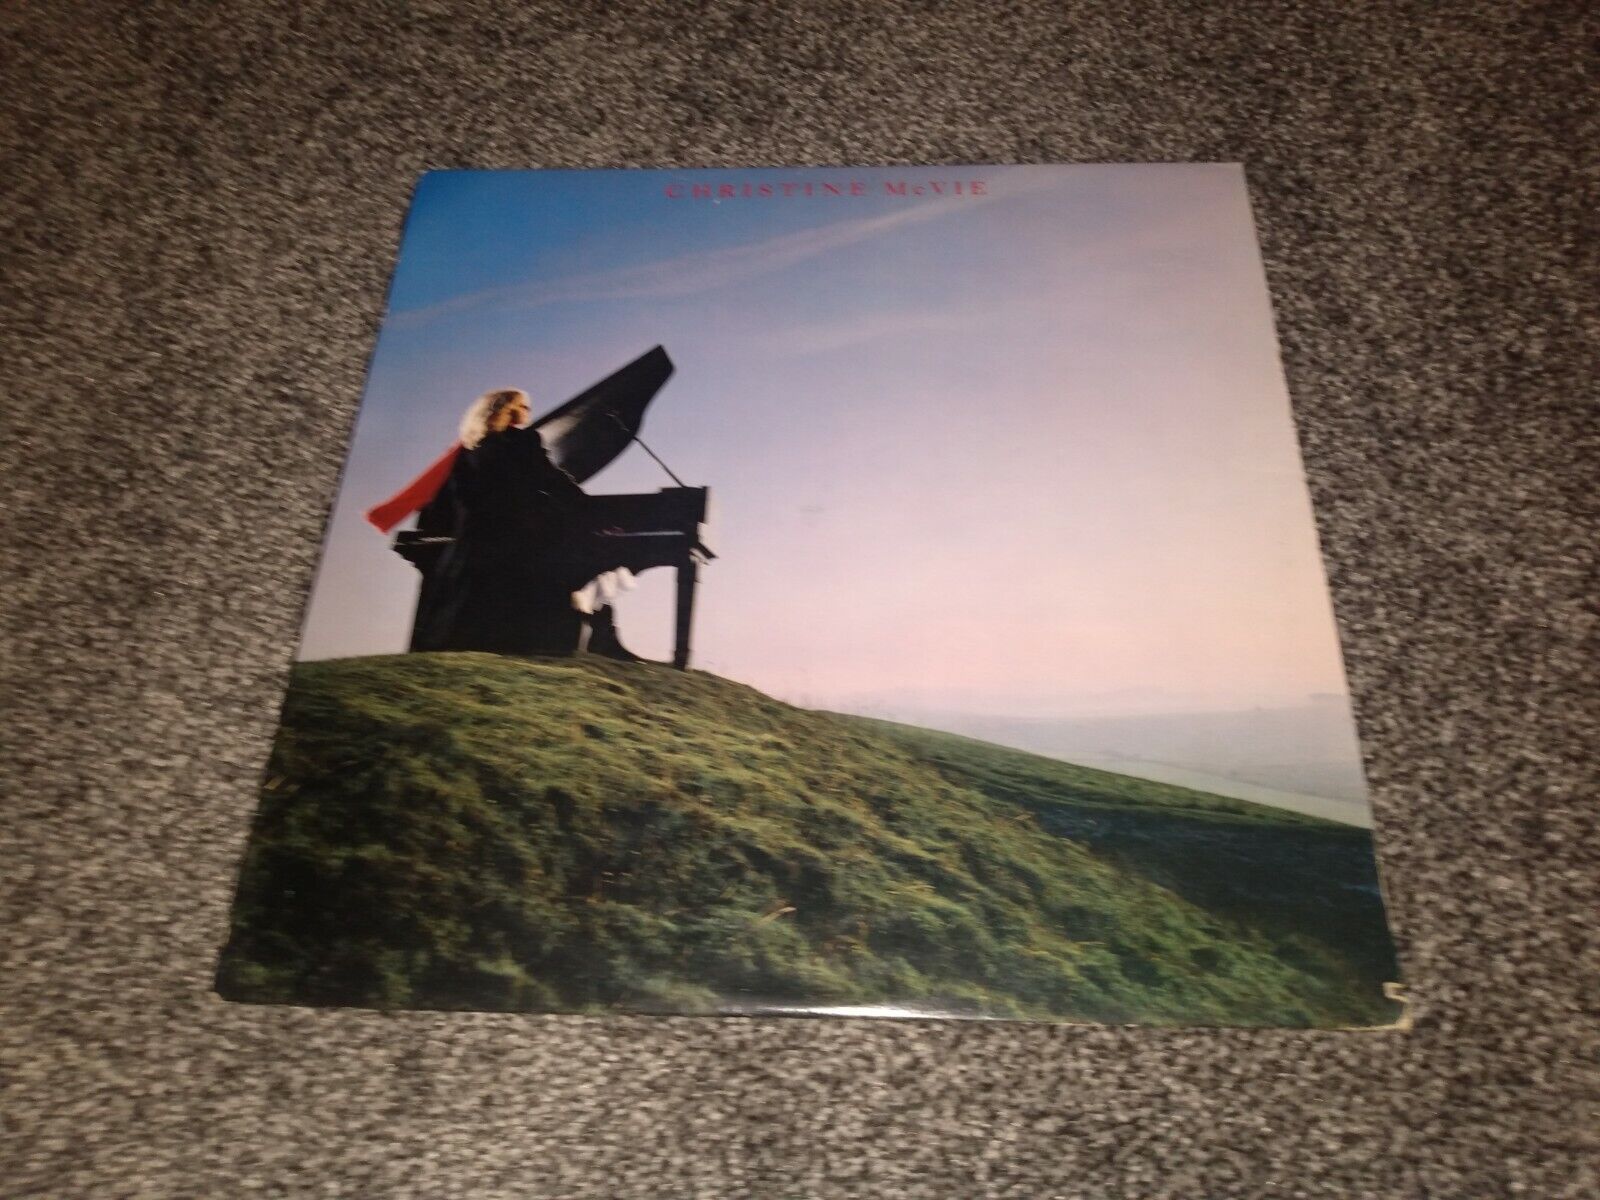 Christine McVie Self Titled Vinyl Record LP